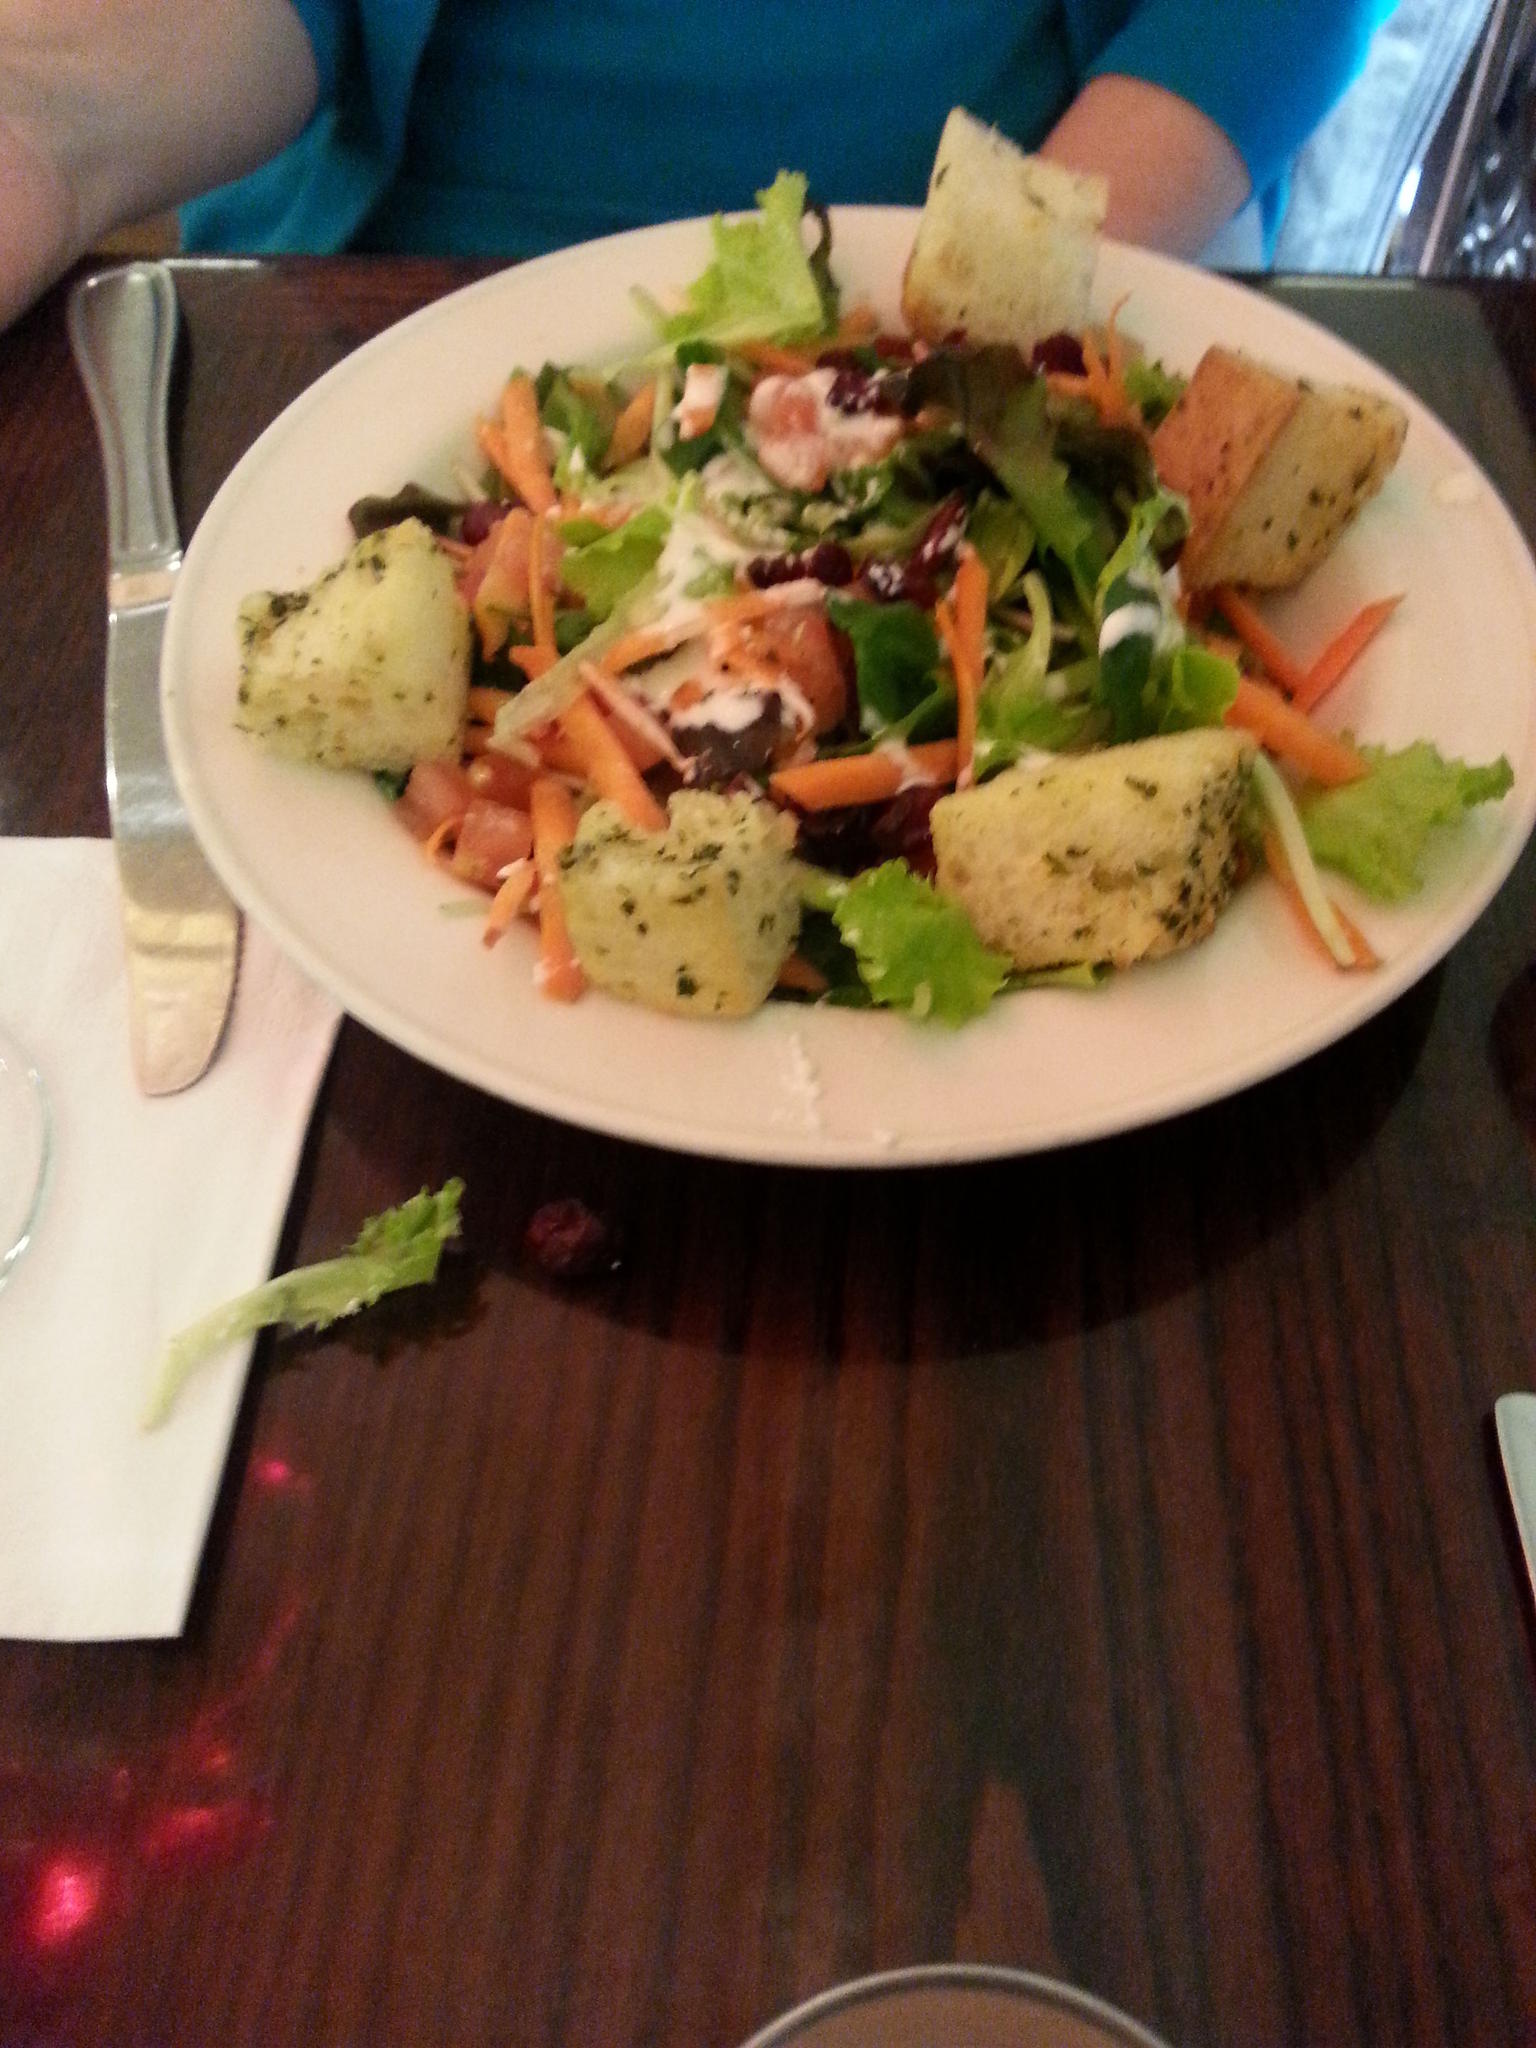 Great salad at the Venice Hard Rock!